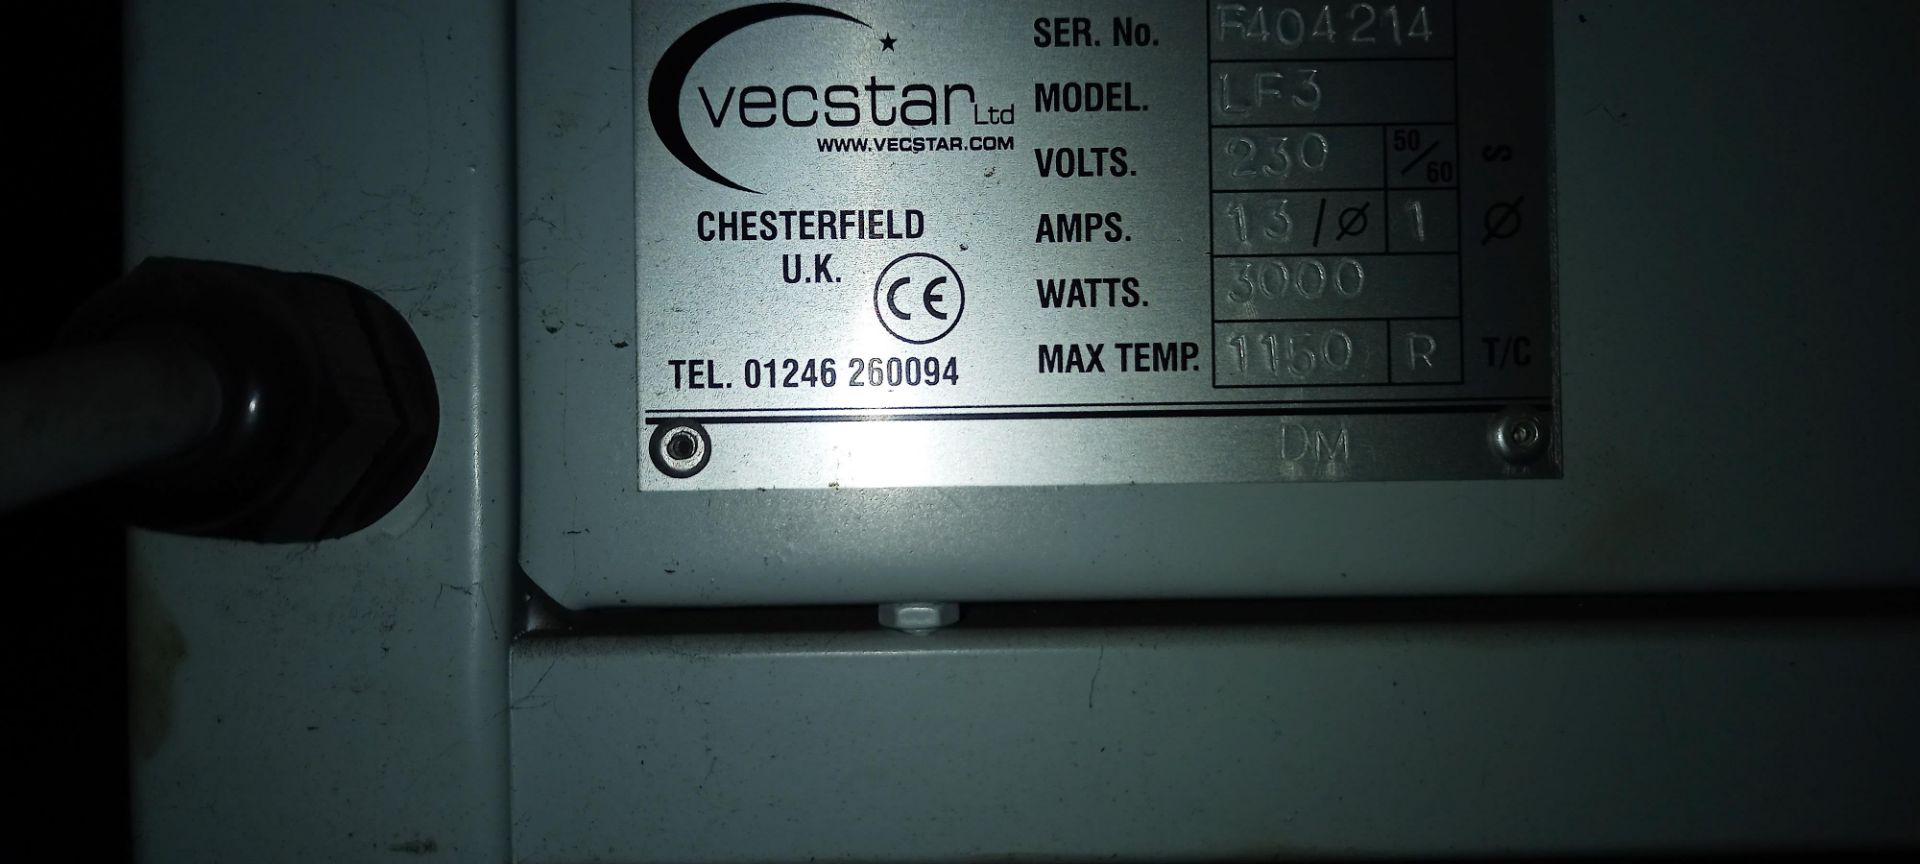 Vecstar Ltd Model:LR3. Countertop Oven 240v - Image 3 of 3